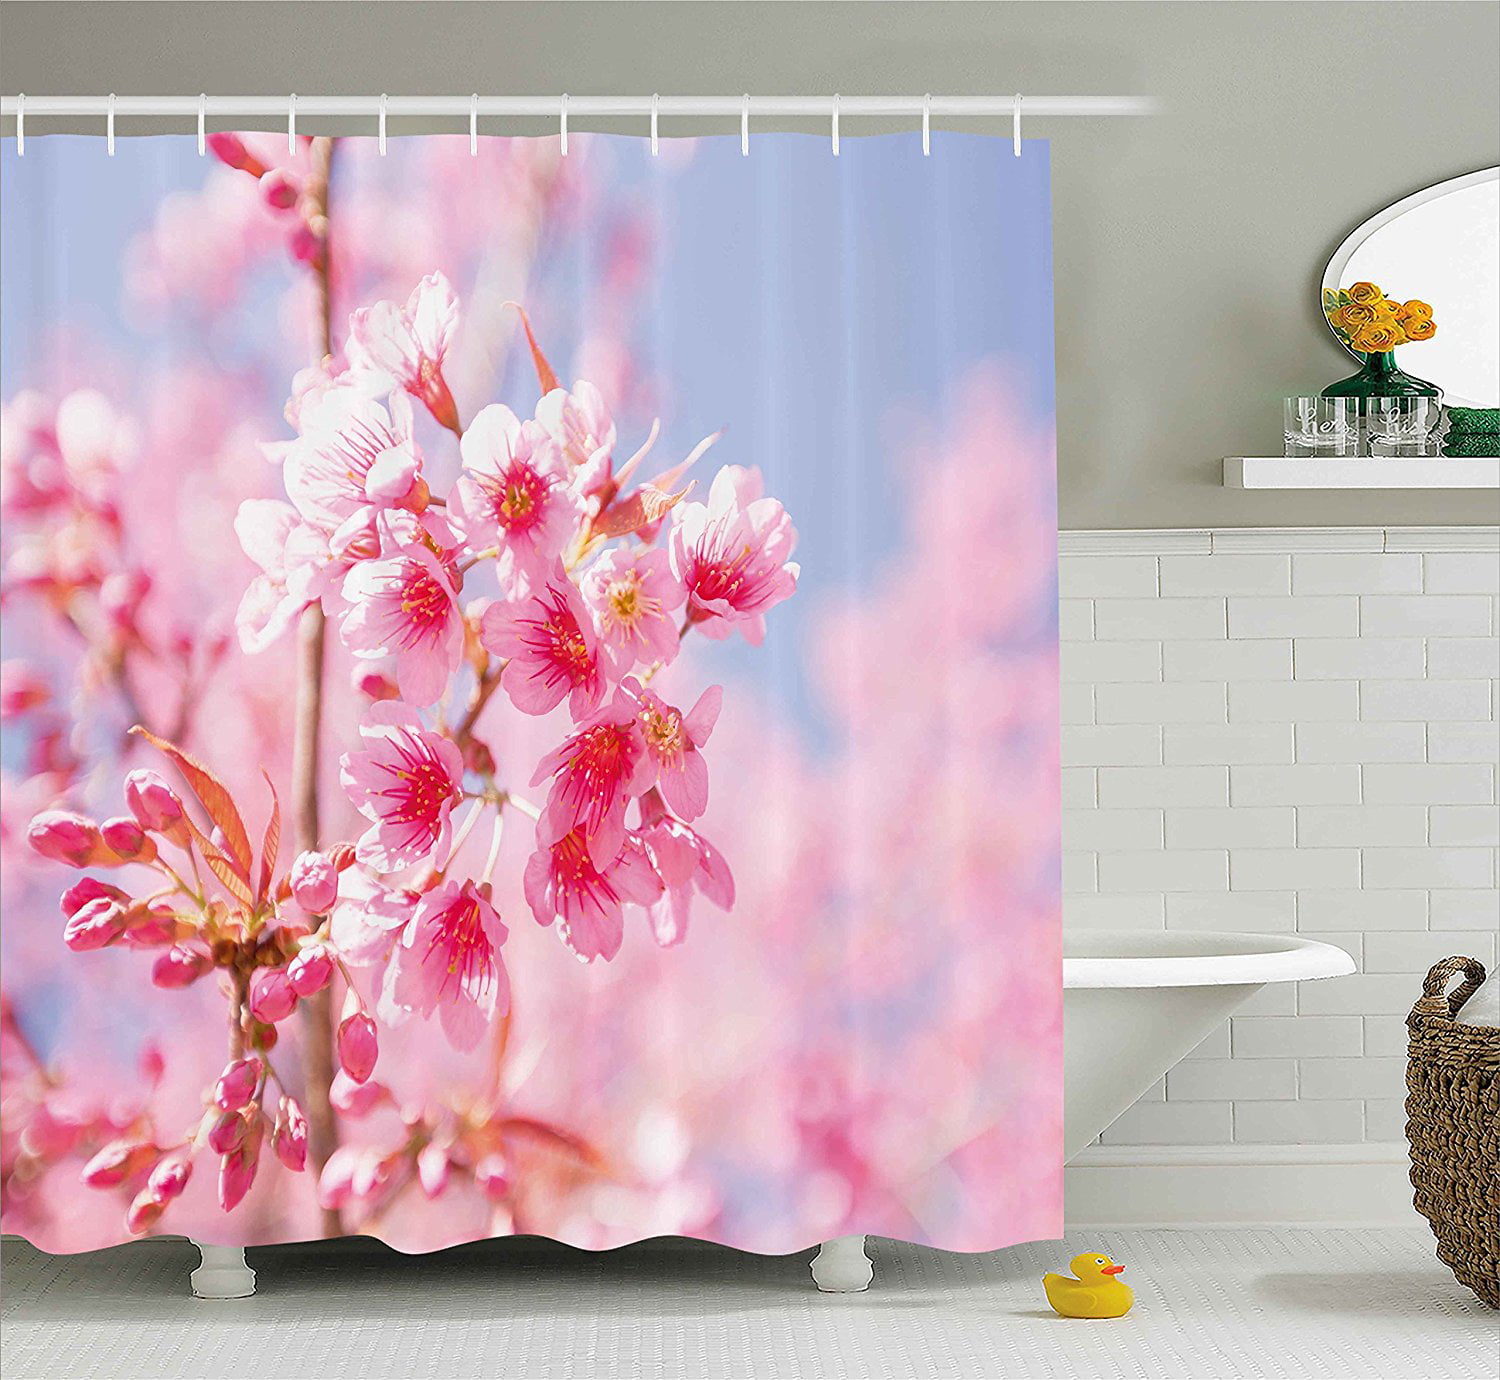 79" Bathroom Waterproof Fabric Shower Curtain Set Pink Flowers Tree Path Forest 